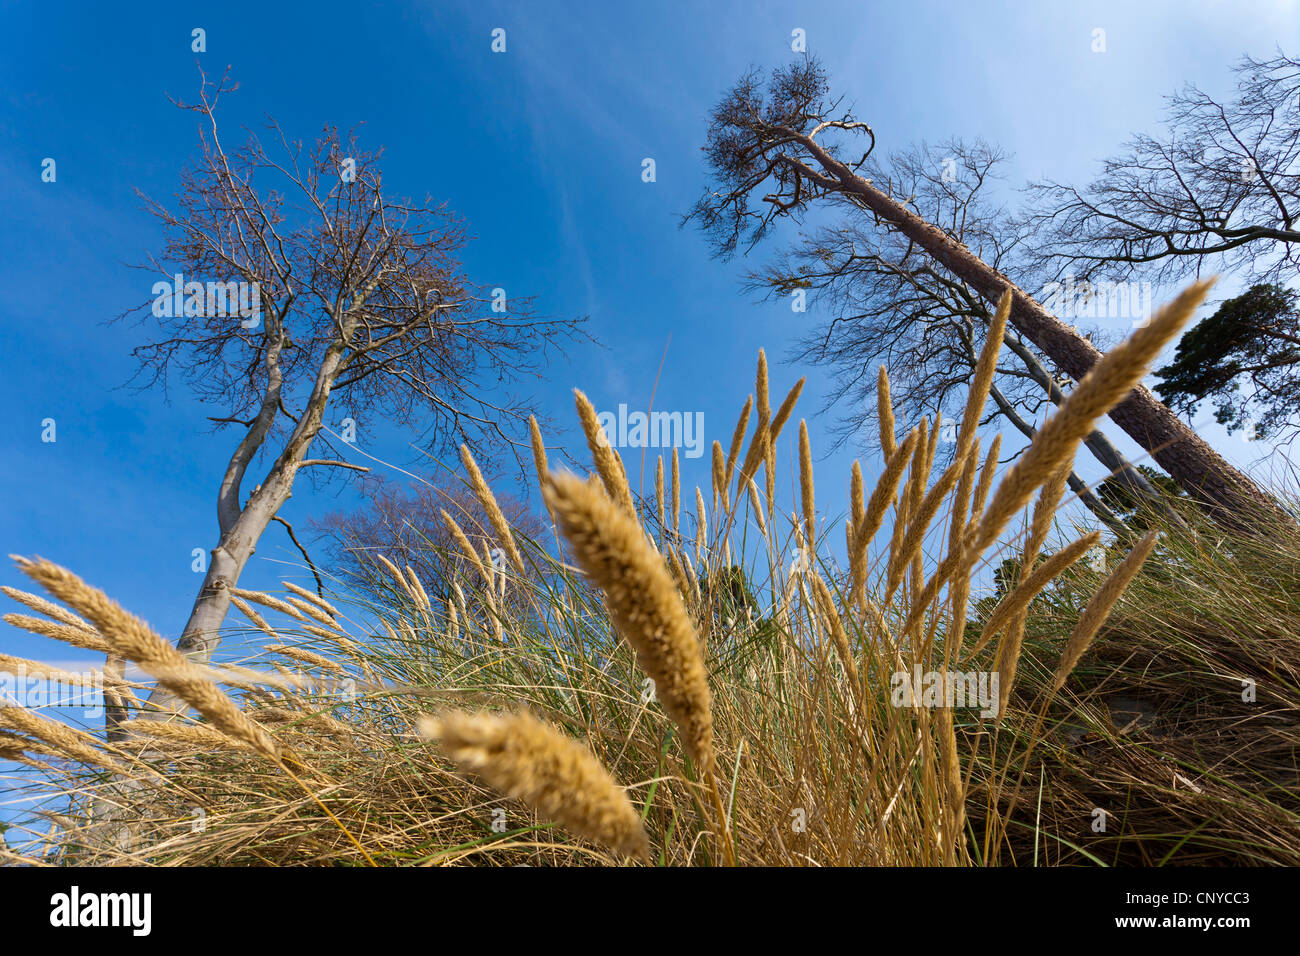 beach grass, European beachgrass, marram grass, psamma, sea sand-reed (Ammophila arenaria), on a dike with trees, Germany, Mecklenburg-Western Pomerania, Darss, Prerow Stock Photo